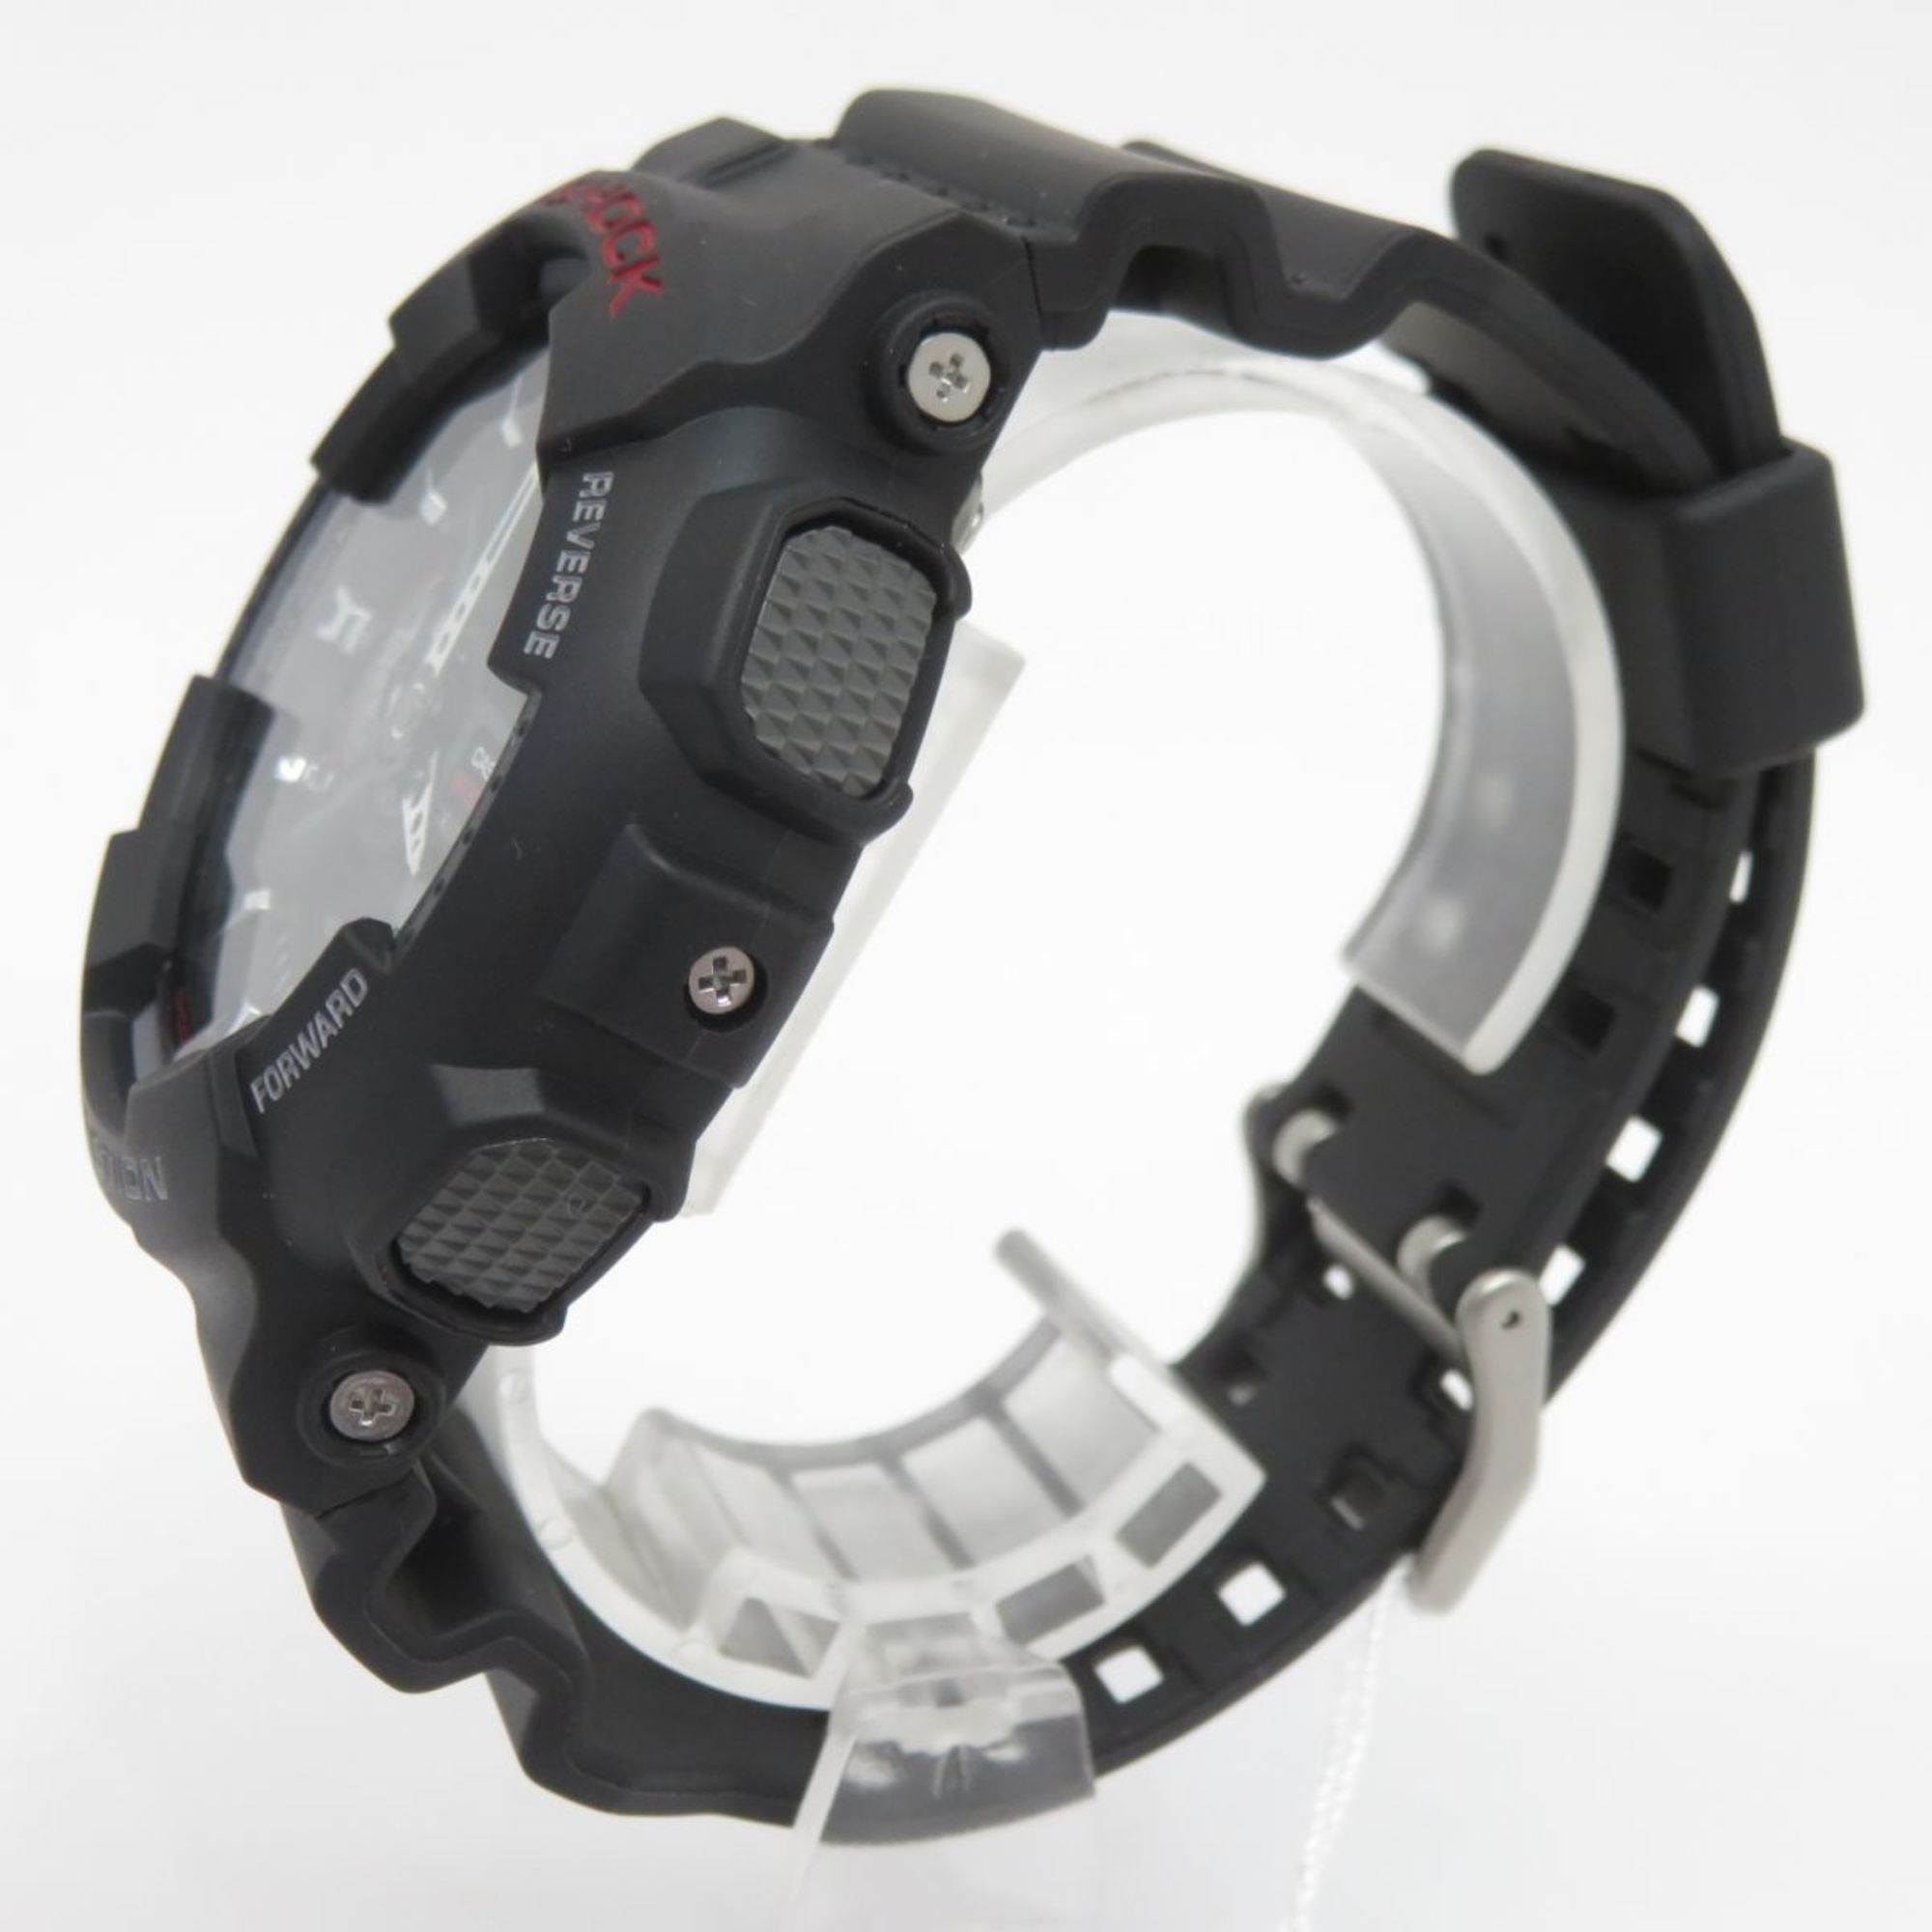 CASIO G-SHOCK GA-110-1AJF quartz watch